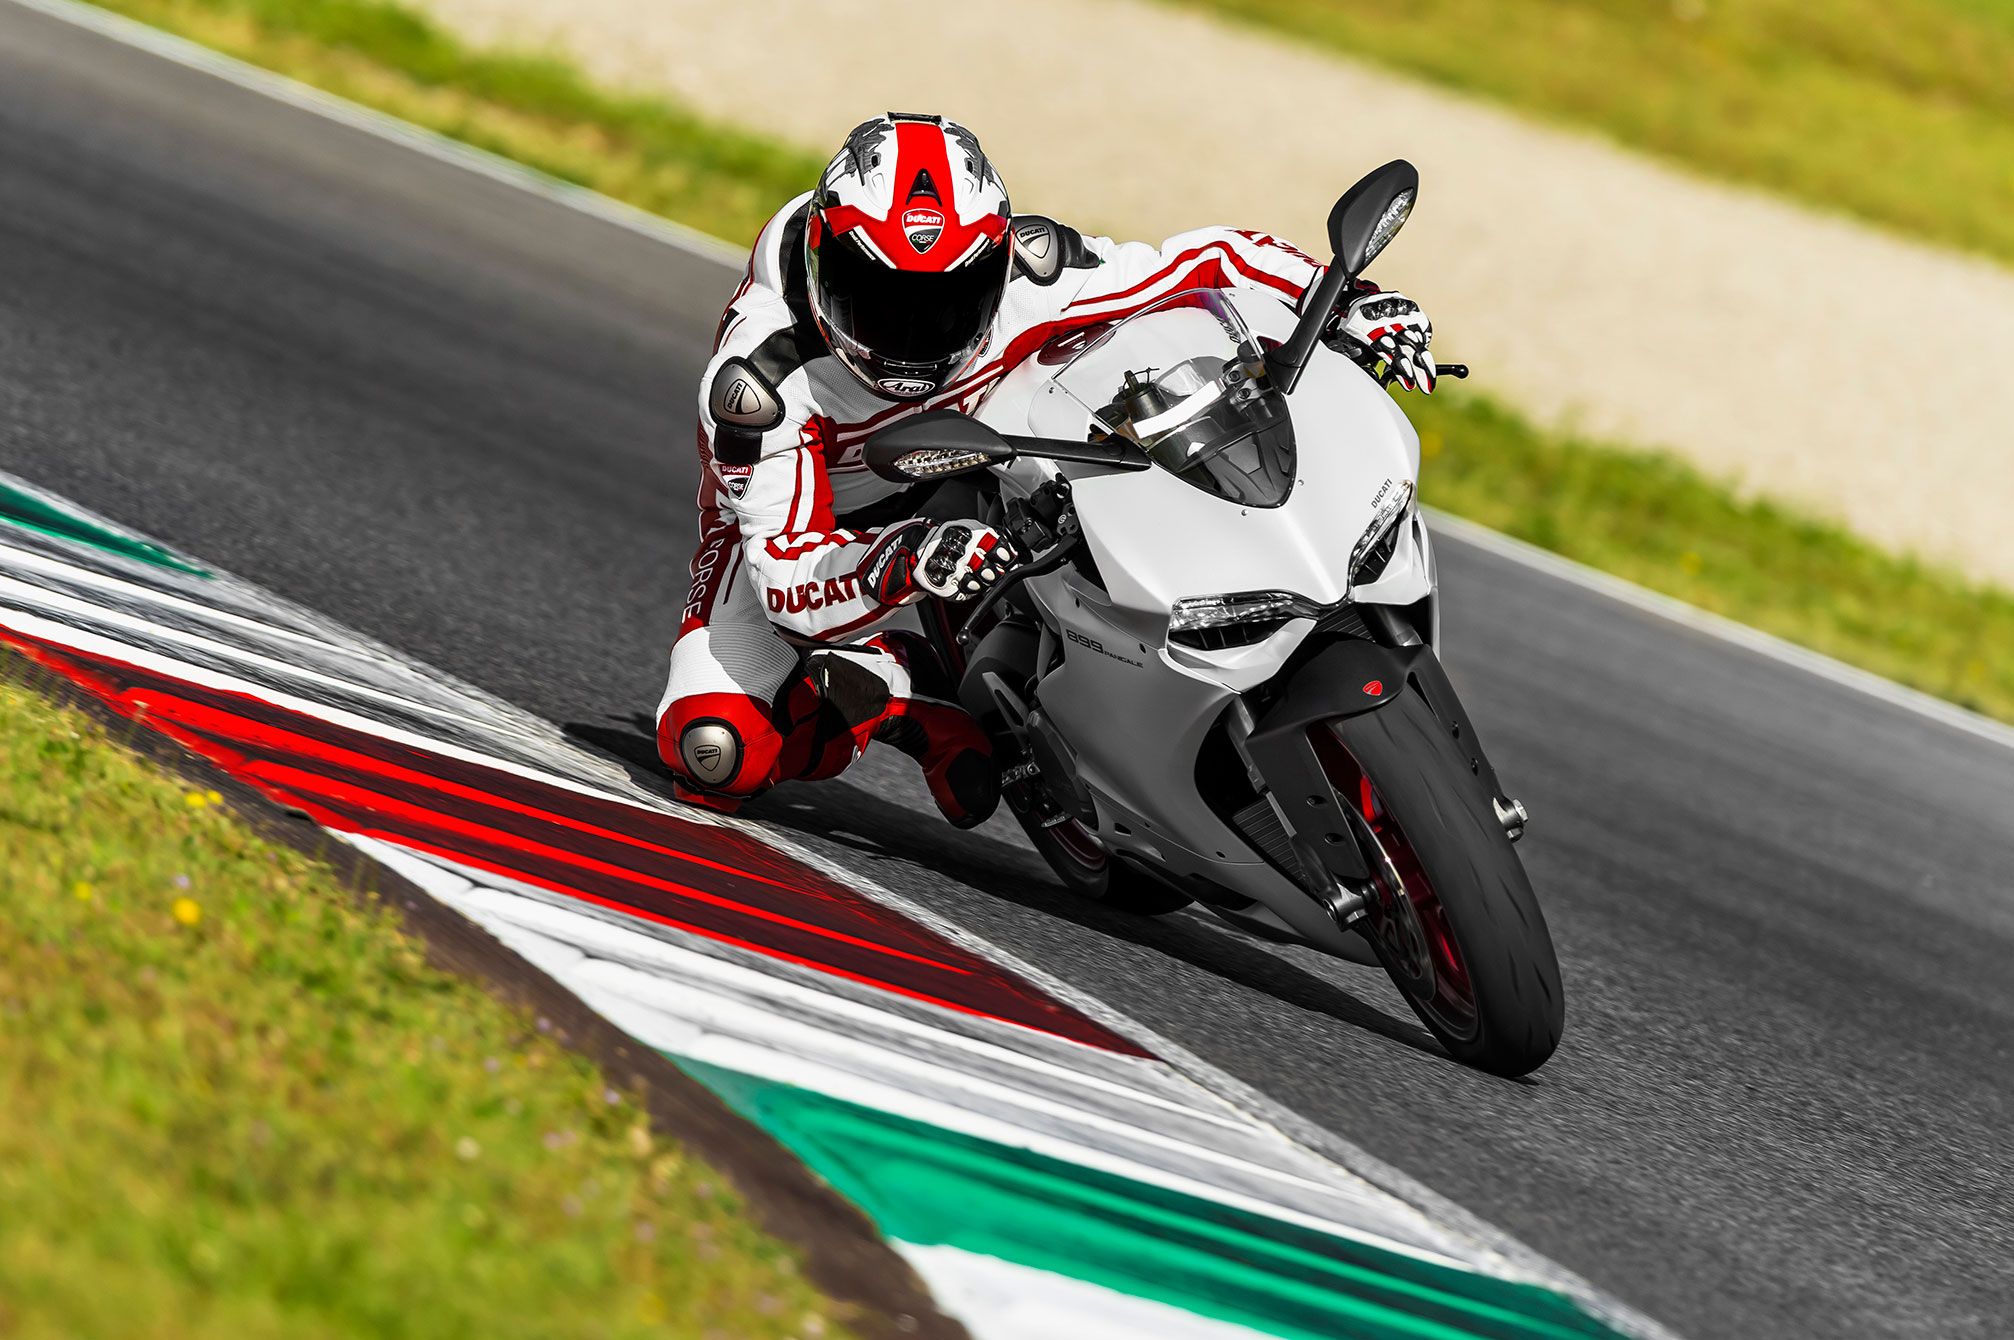 Ducati Panigale Wallpaper Hd - image #140